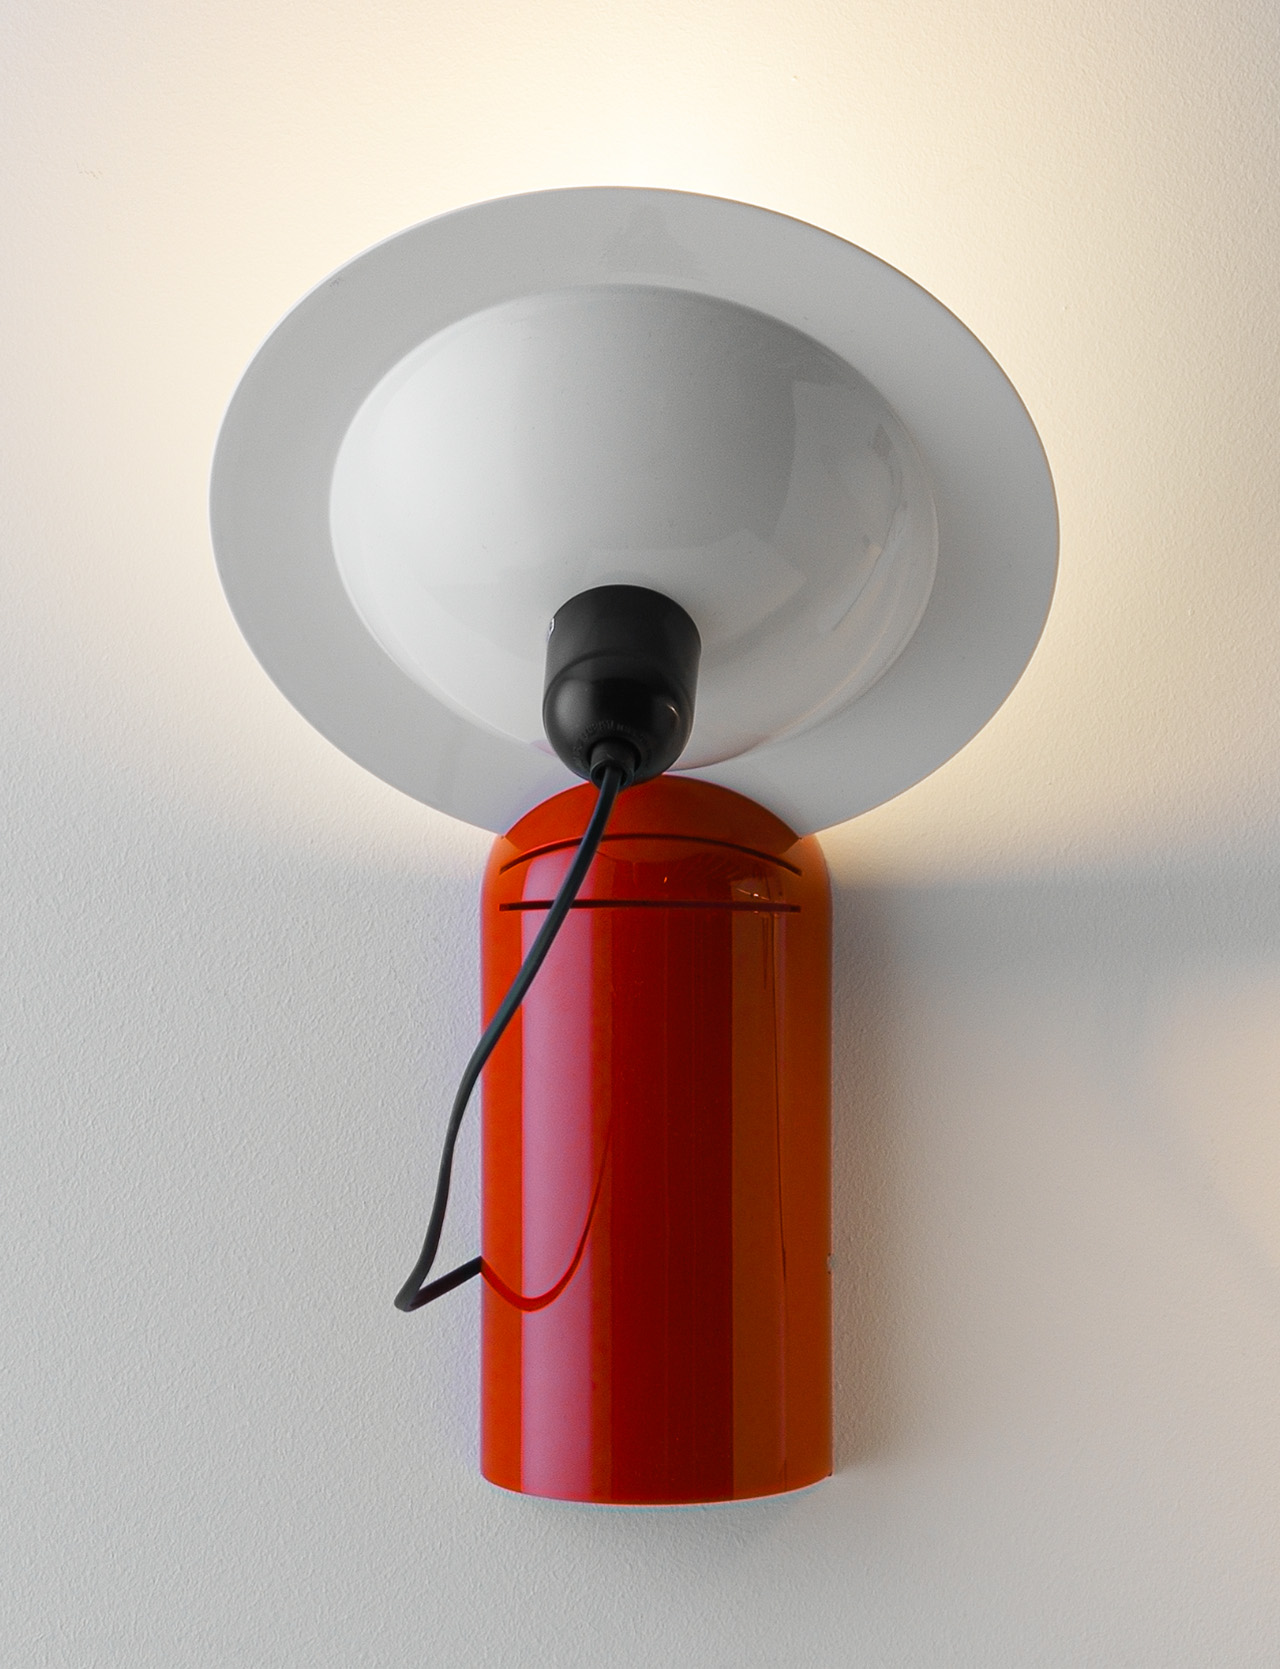 Lampiatta-Lampe für Wand